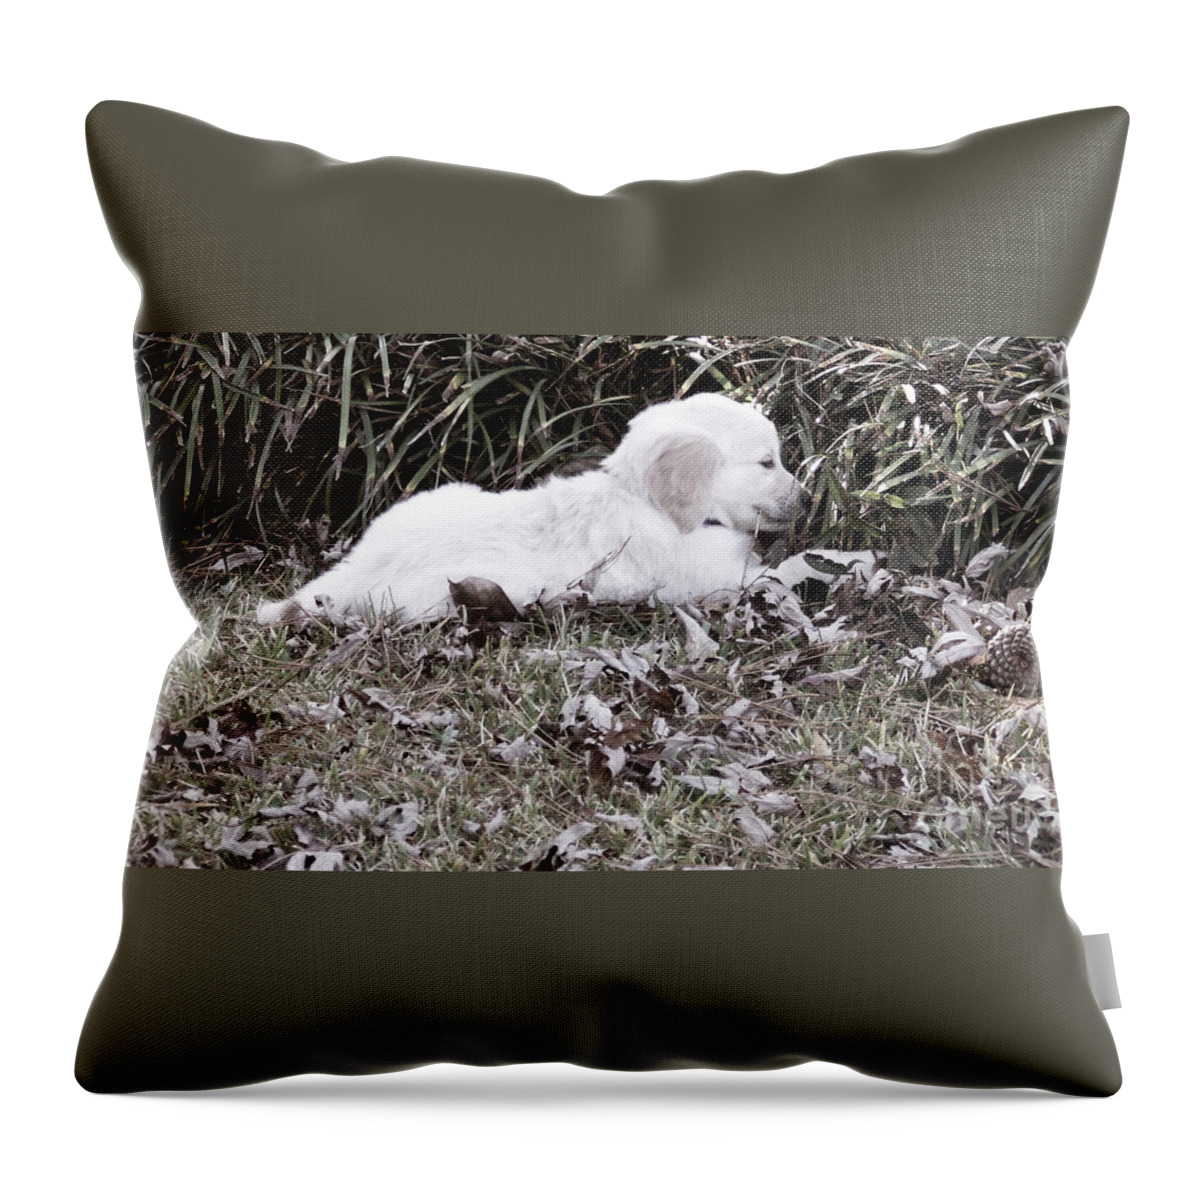 Golden Throw Pillow featuring the photograph Golden Retriever Puppy 2 by Andrea Anderegg